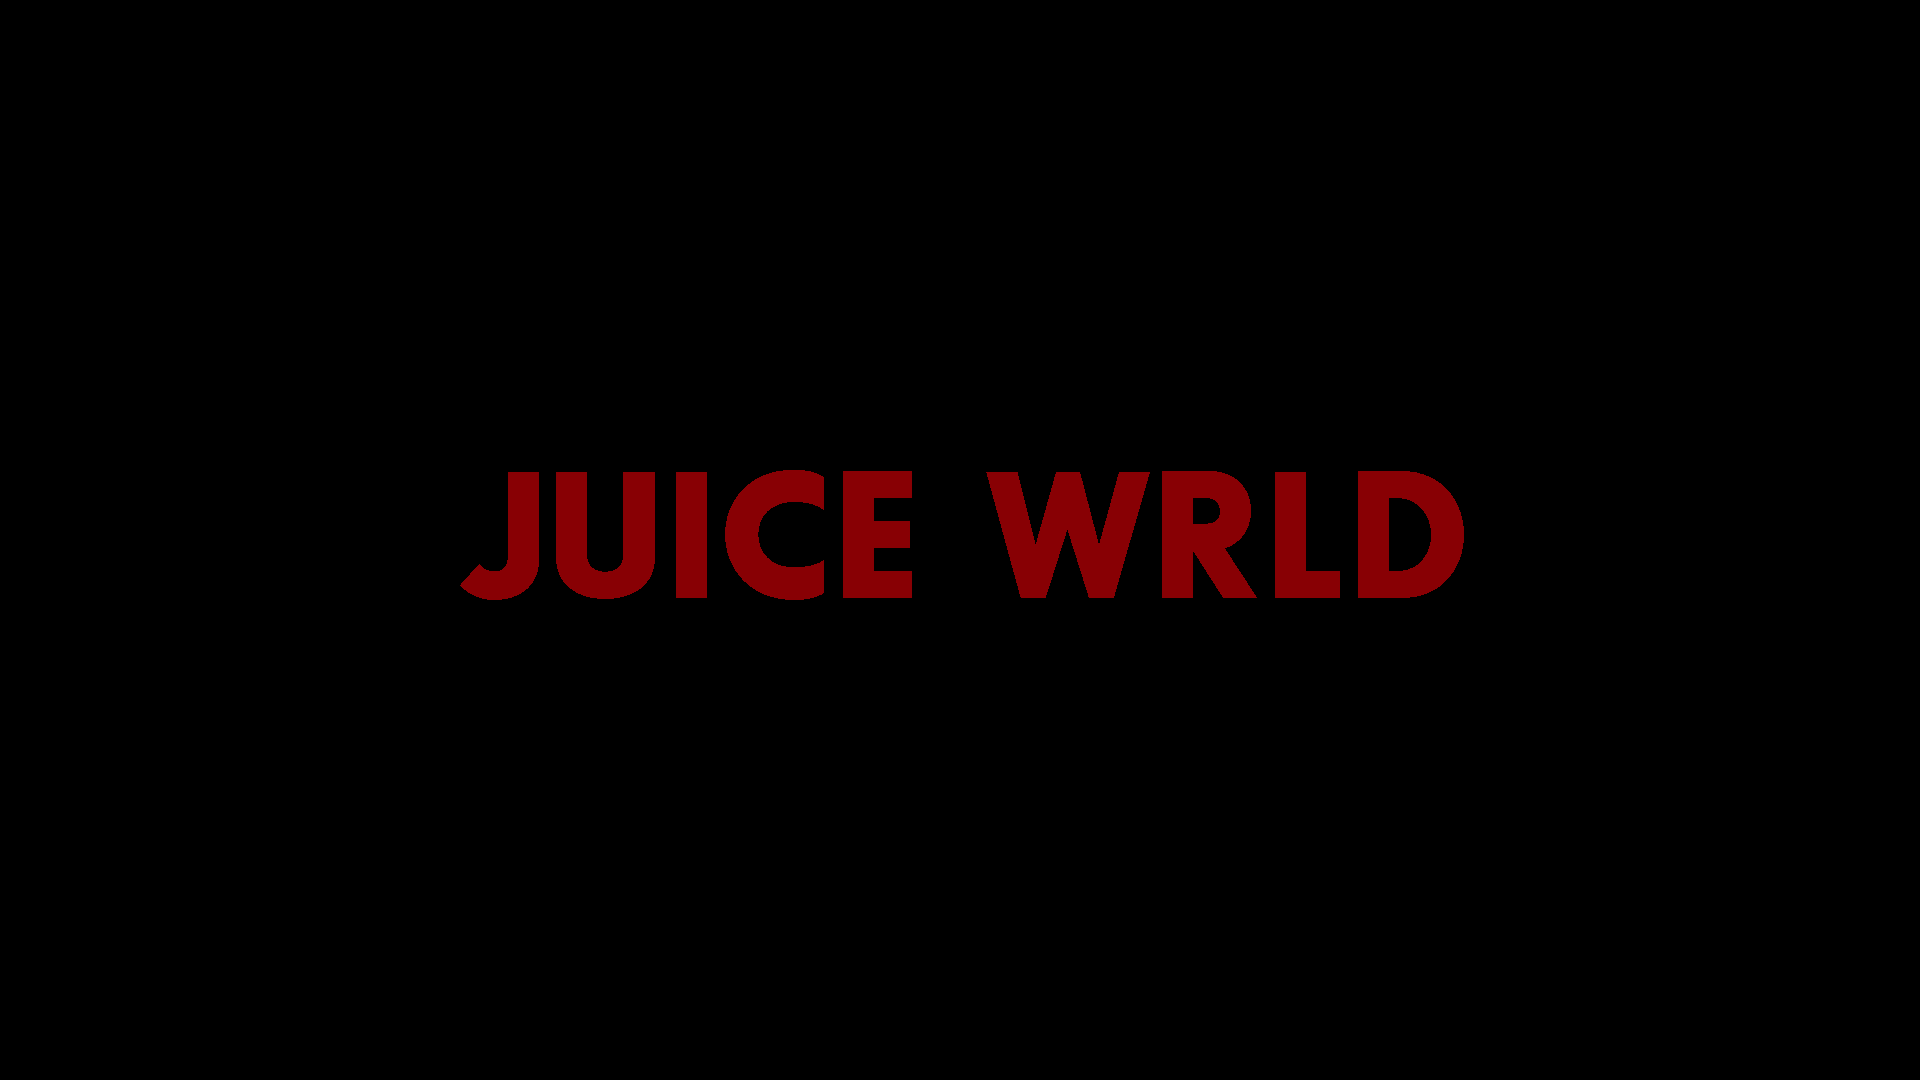 Juice Wrld Wallpaper, Free Stock Wallpaper